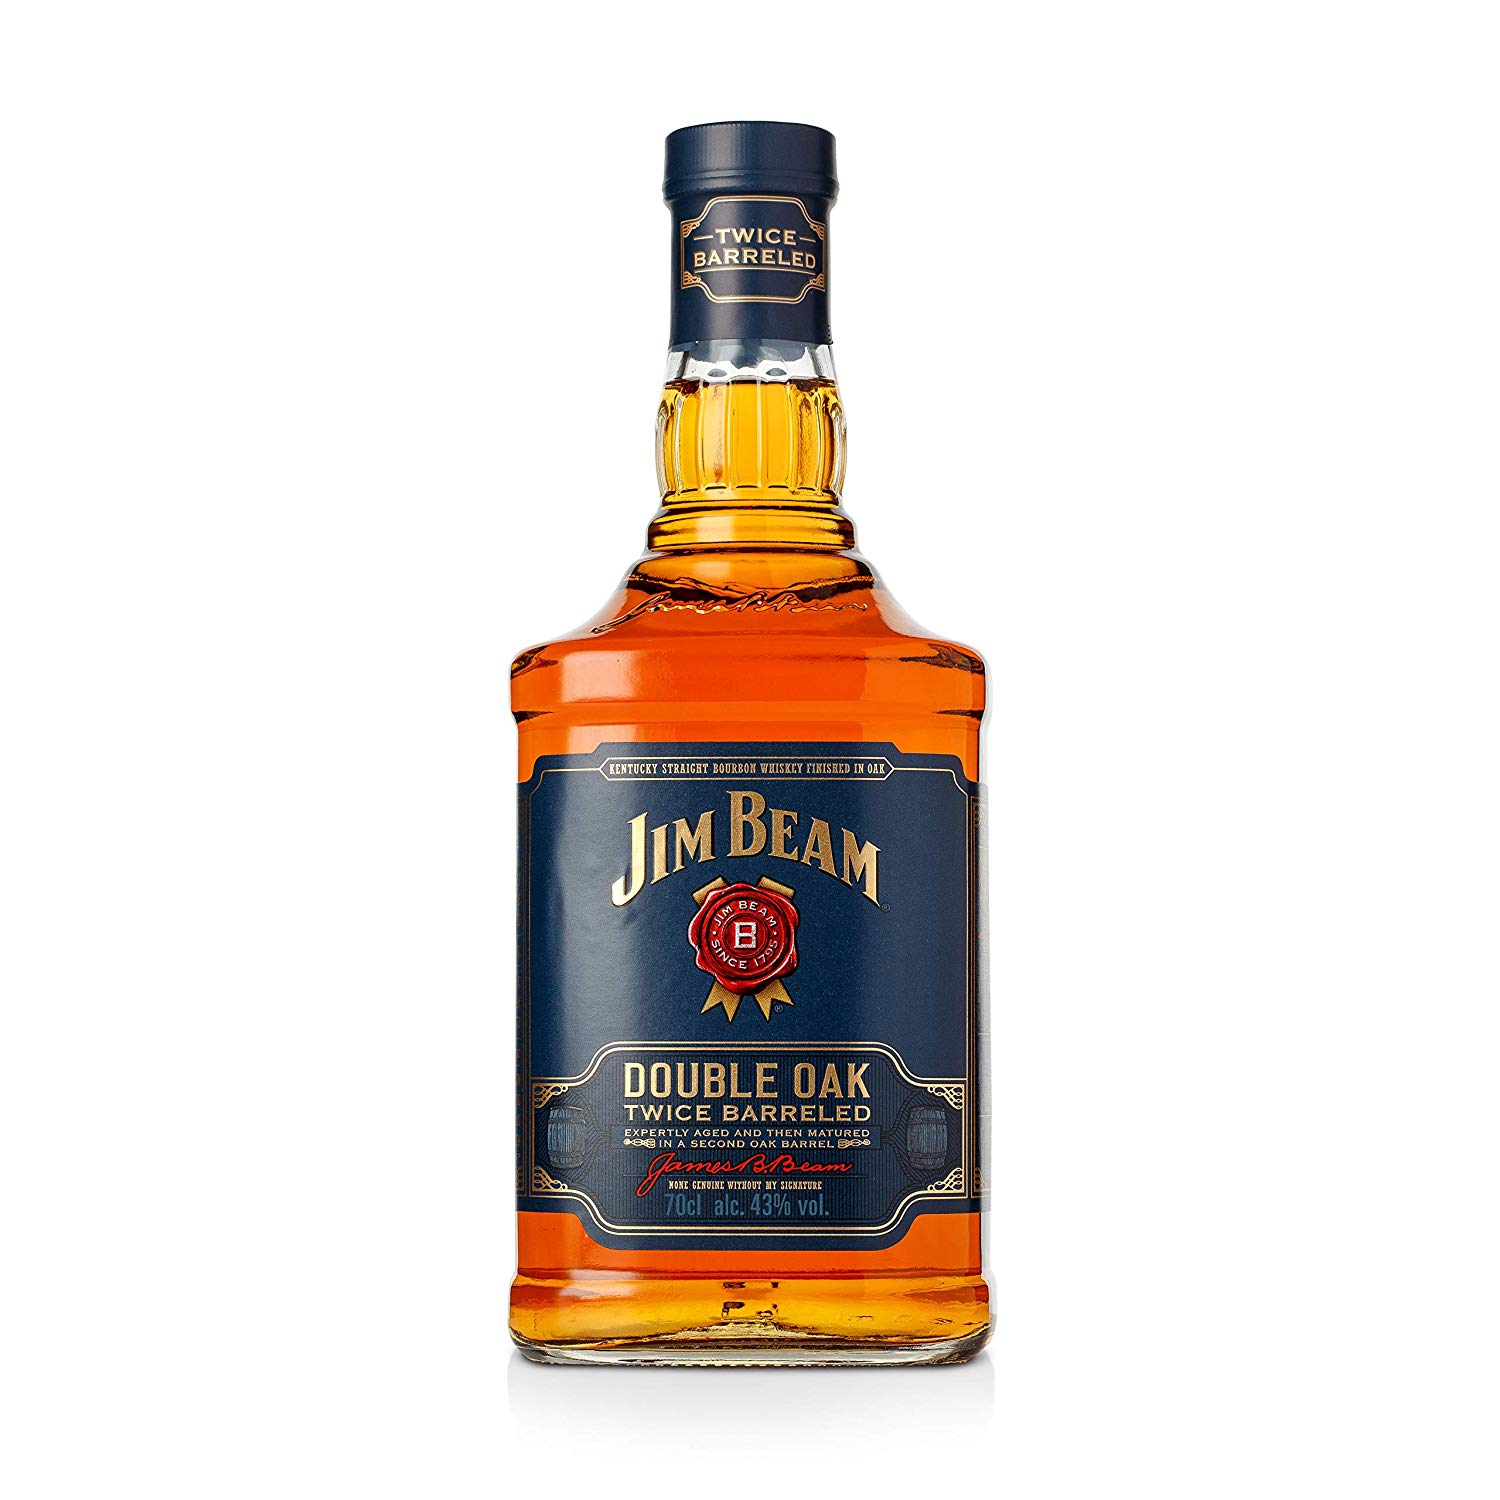 Whisky Bourbon Jim Beam Double Oak Twice Barreled solo 14,2€